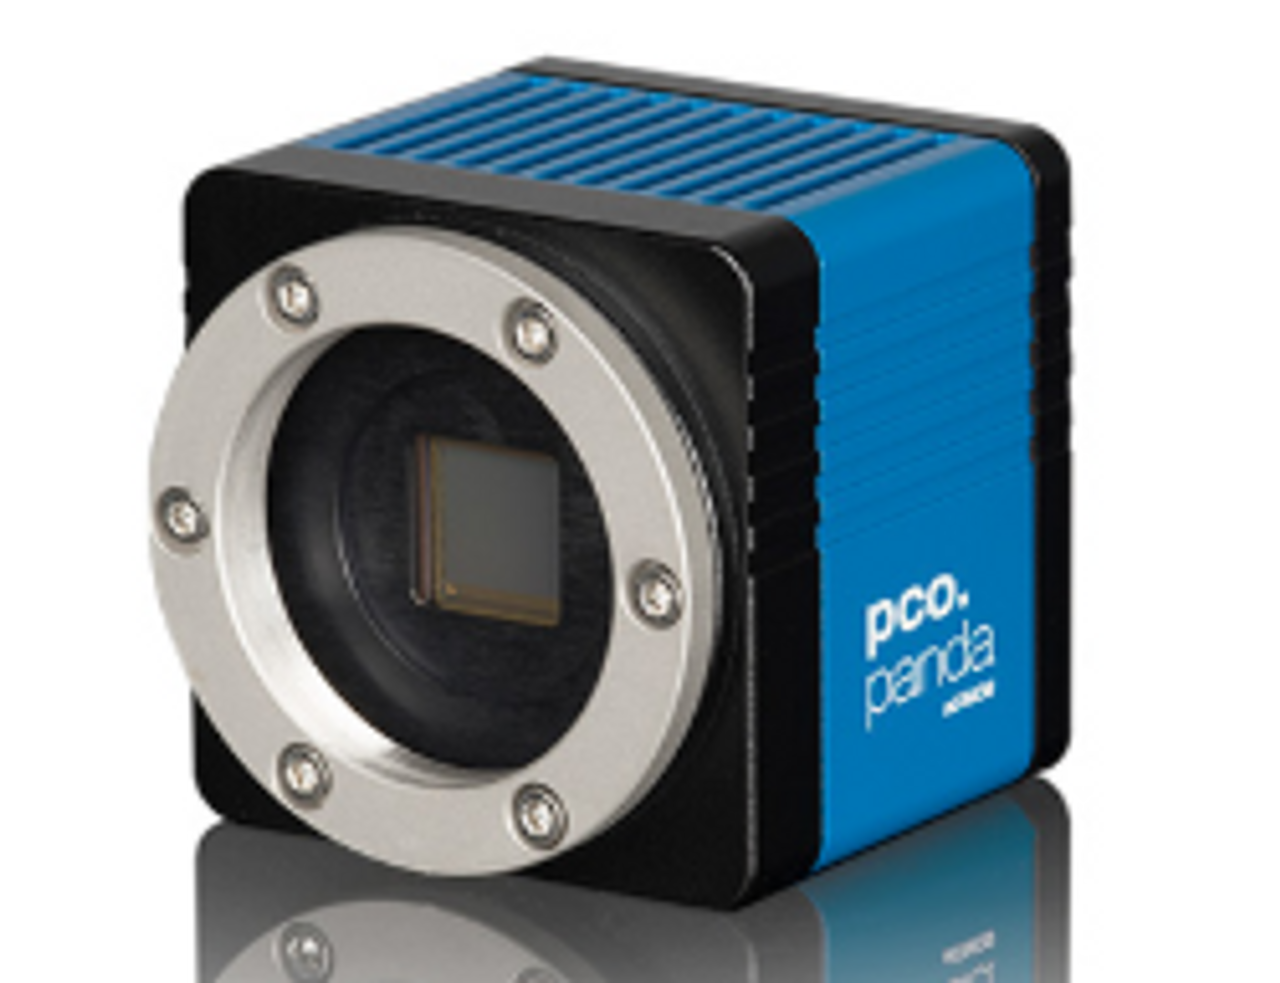 pco.panda 26 ultra compact sCMOS camera